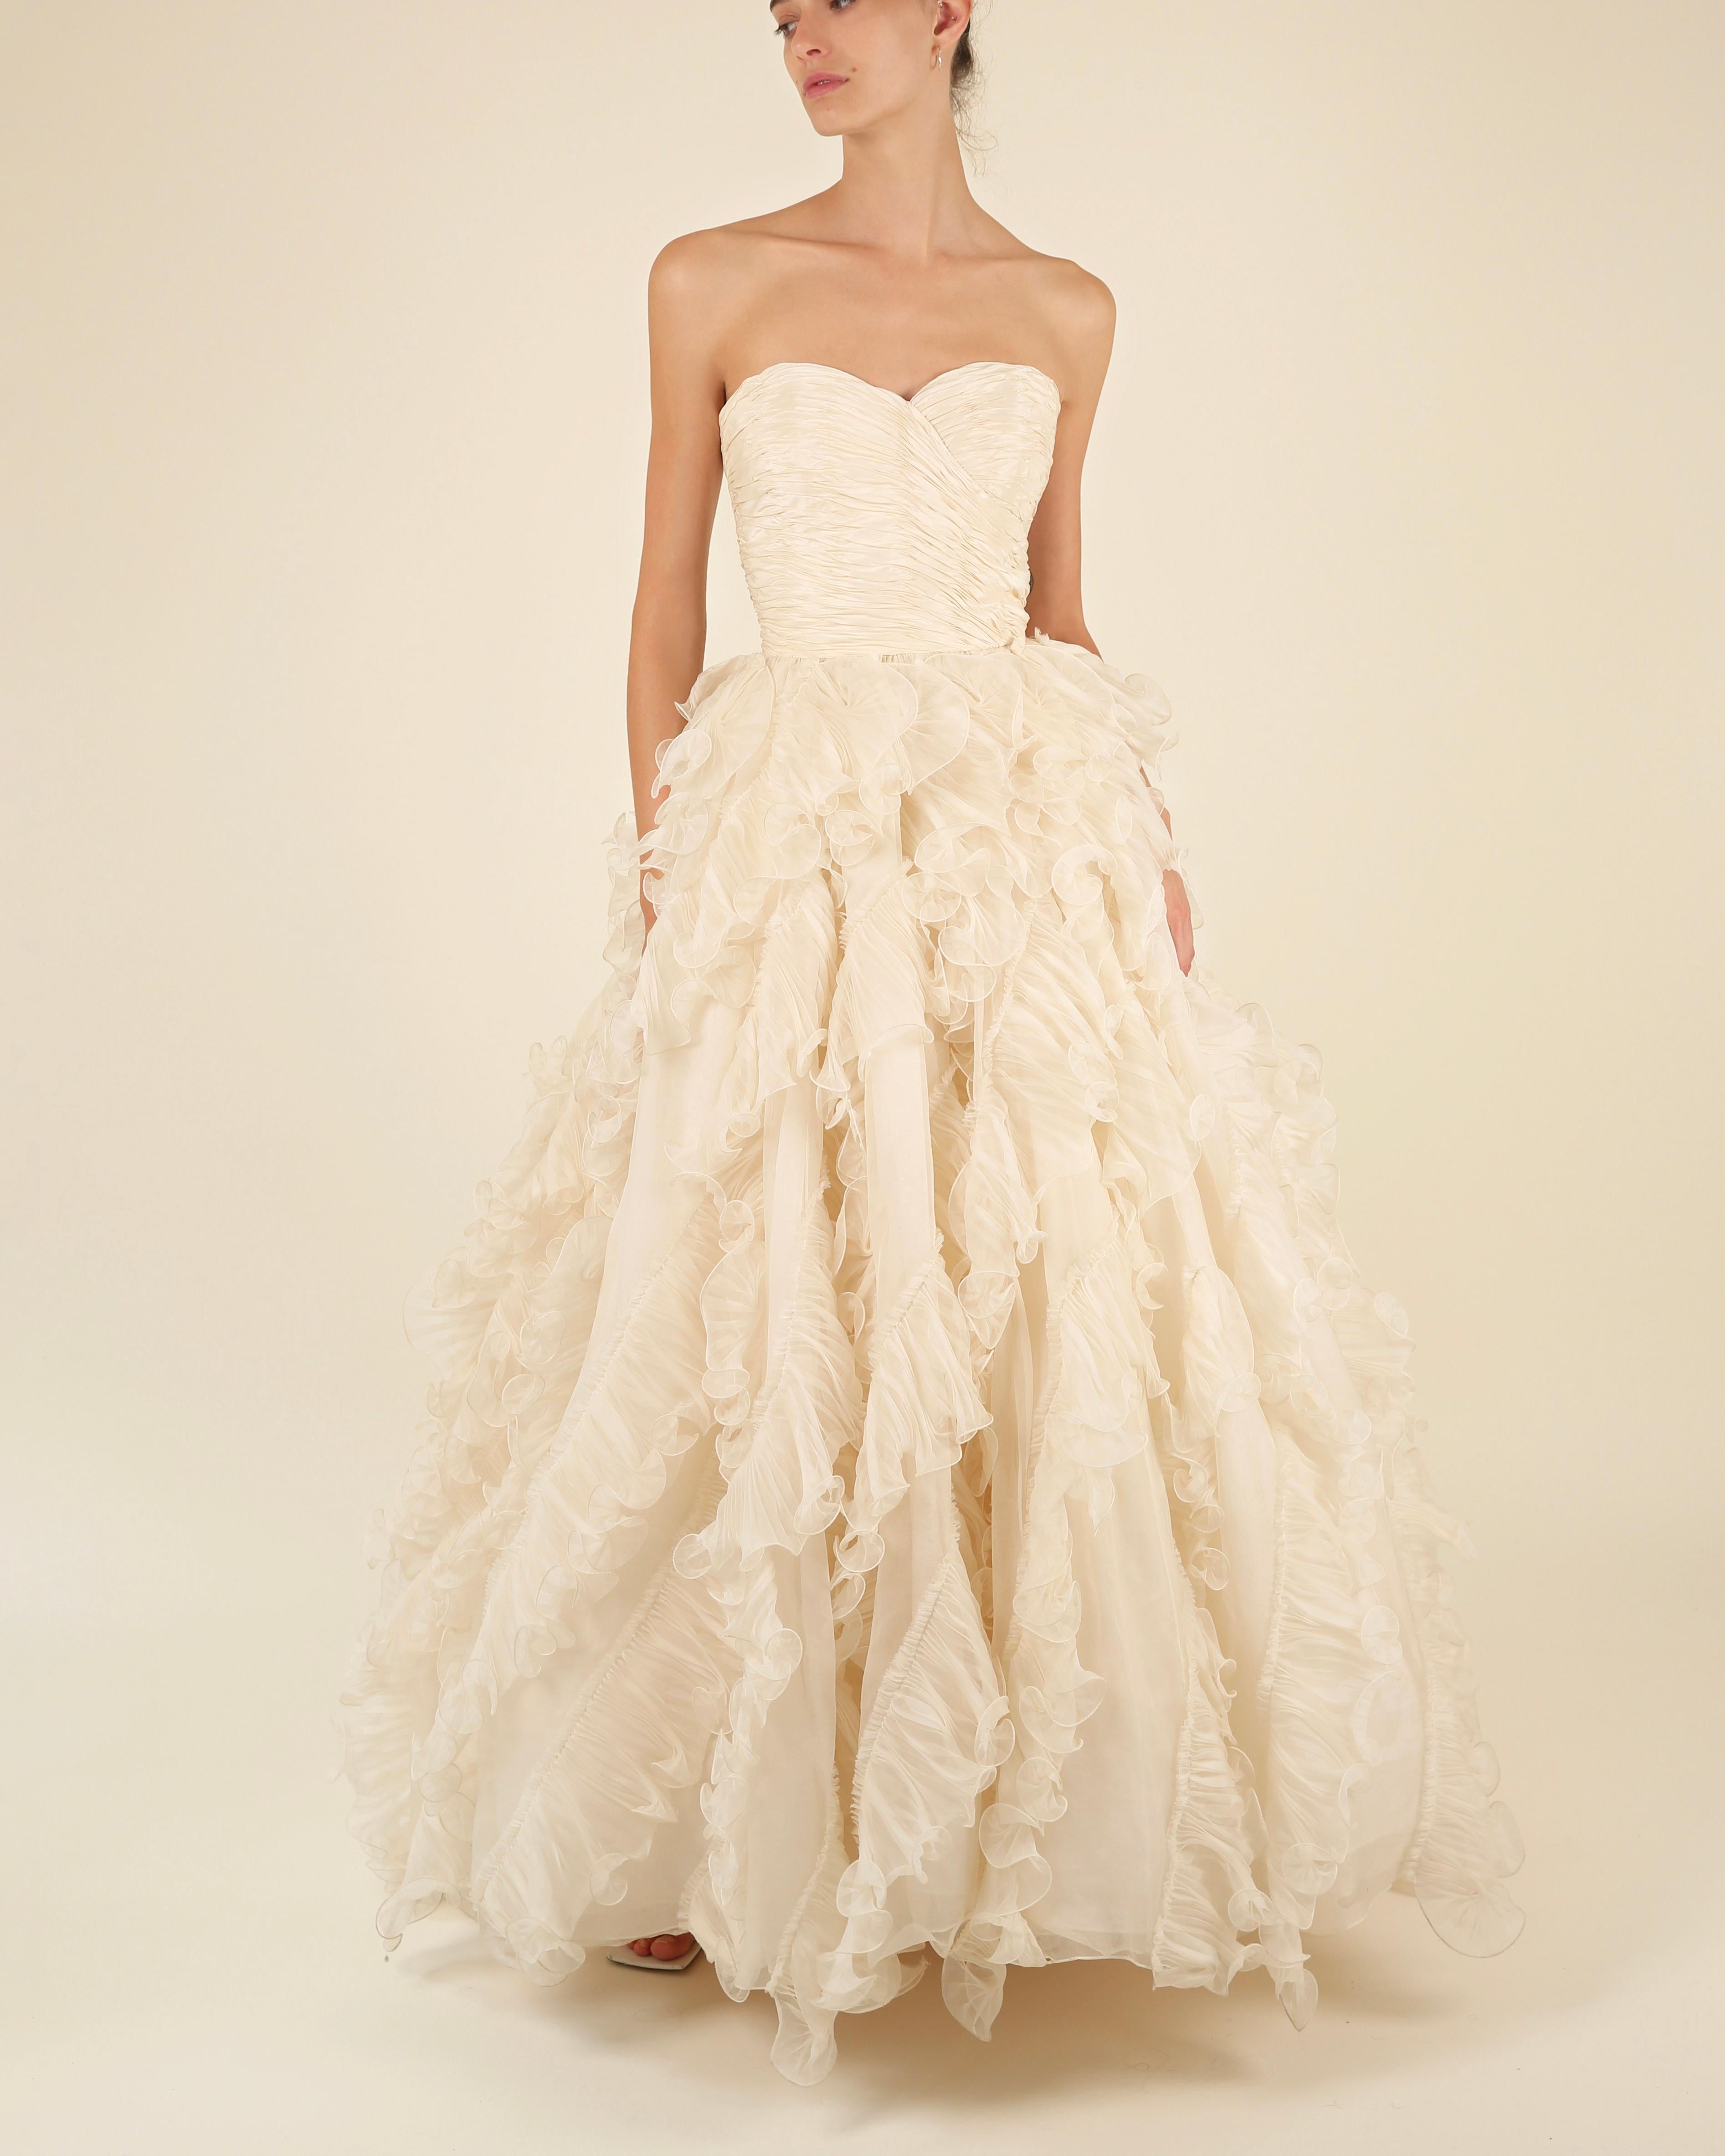 Oscar de la Renta S/S08 bridal ivory strapless vintage ruffle wedding dress gown In Fair Condition For Sale In Paris, FR